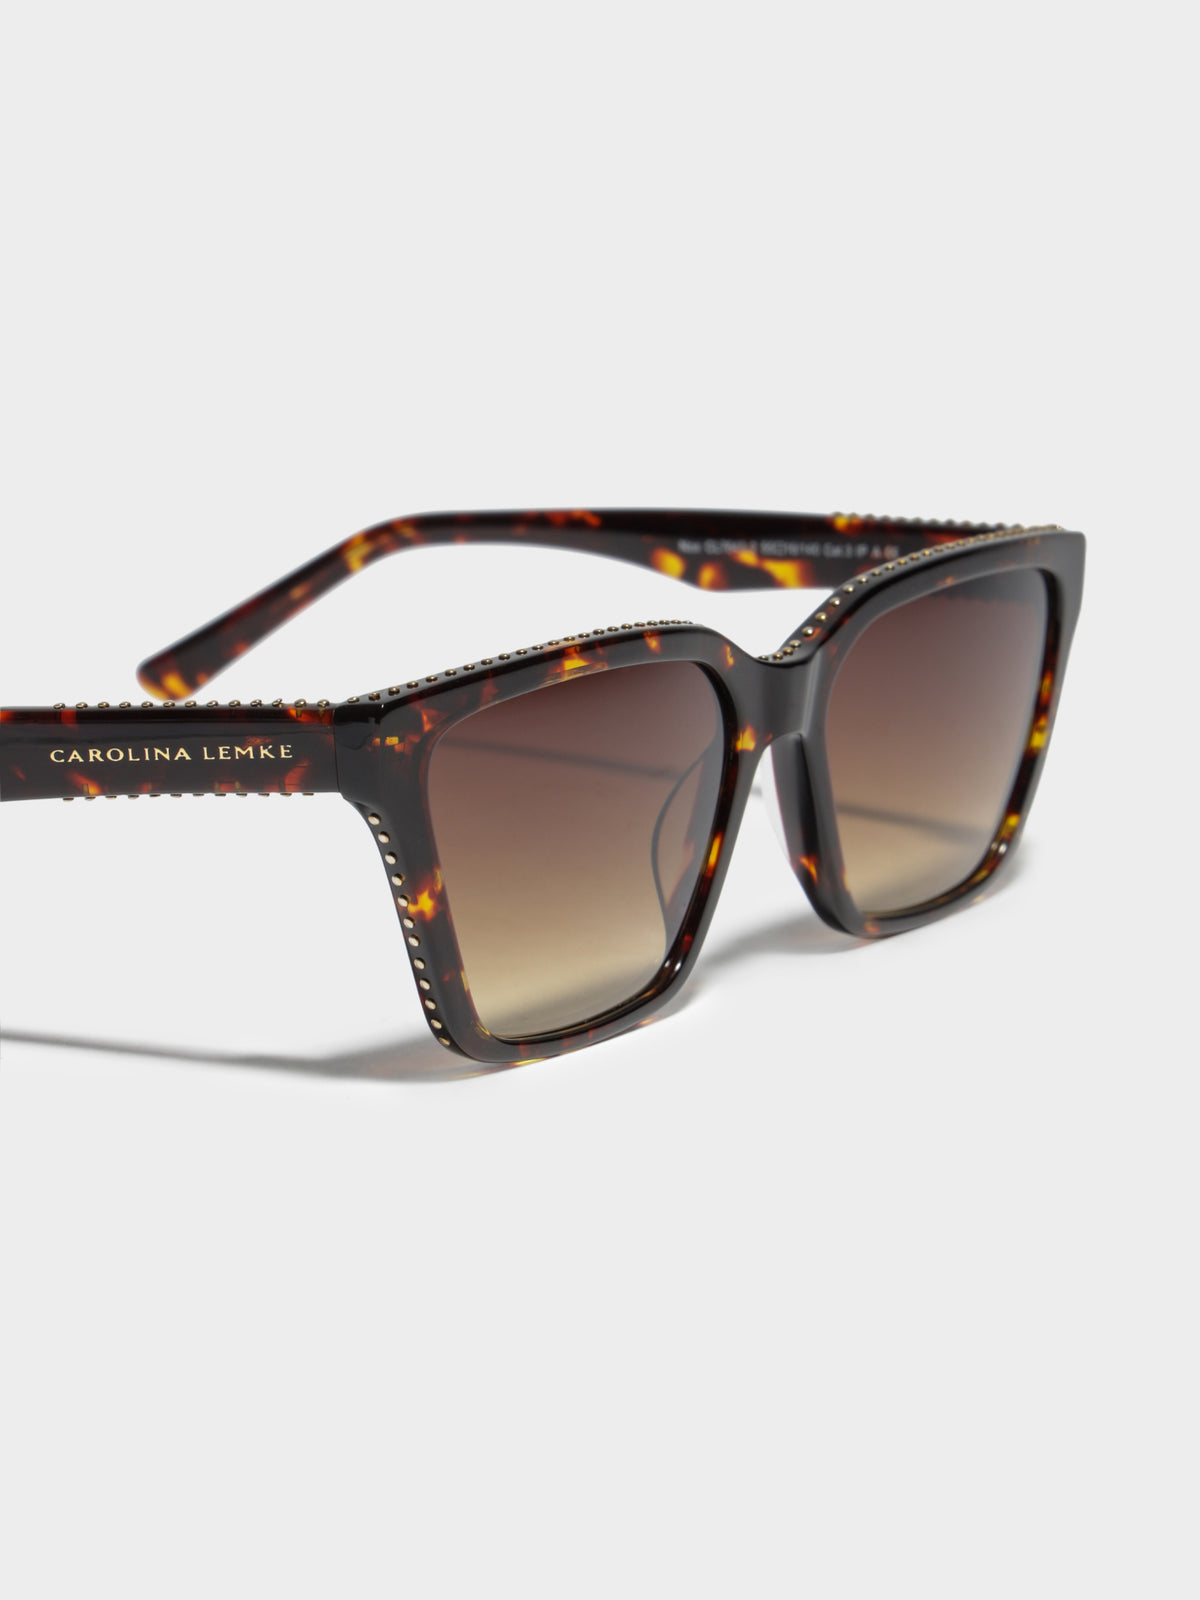 CL7843 Nox Sunglasses in Tortoiseshell